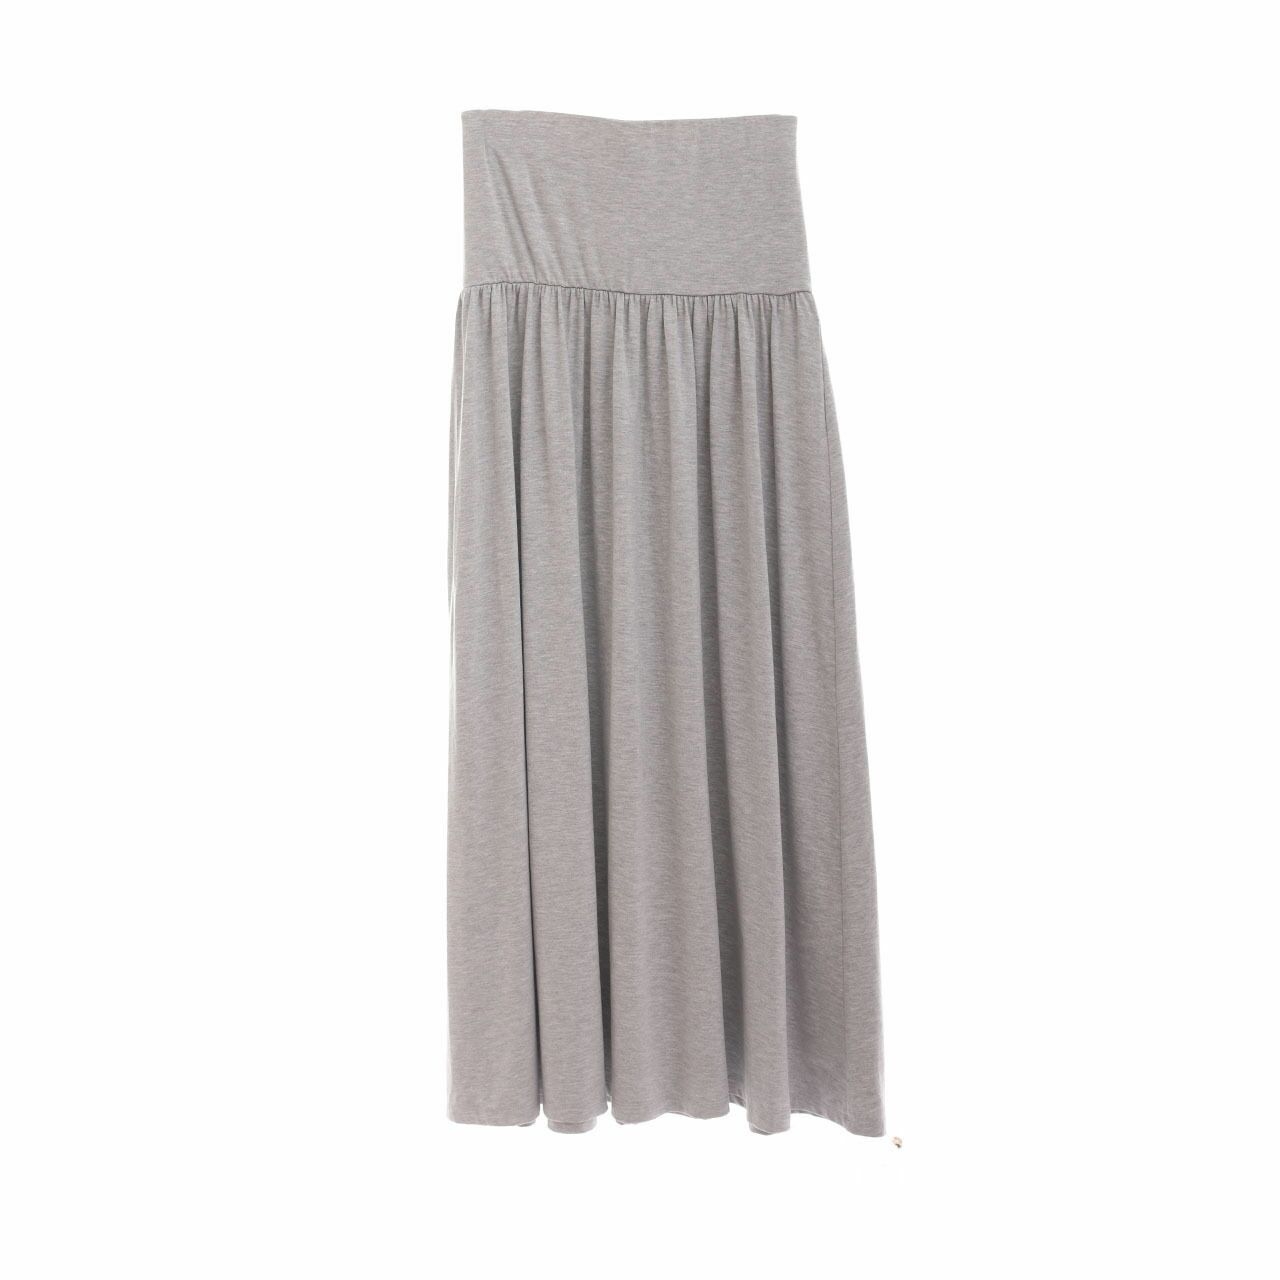 UNIQLO Grey Maxi Skirt